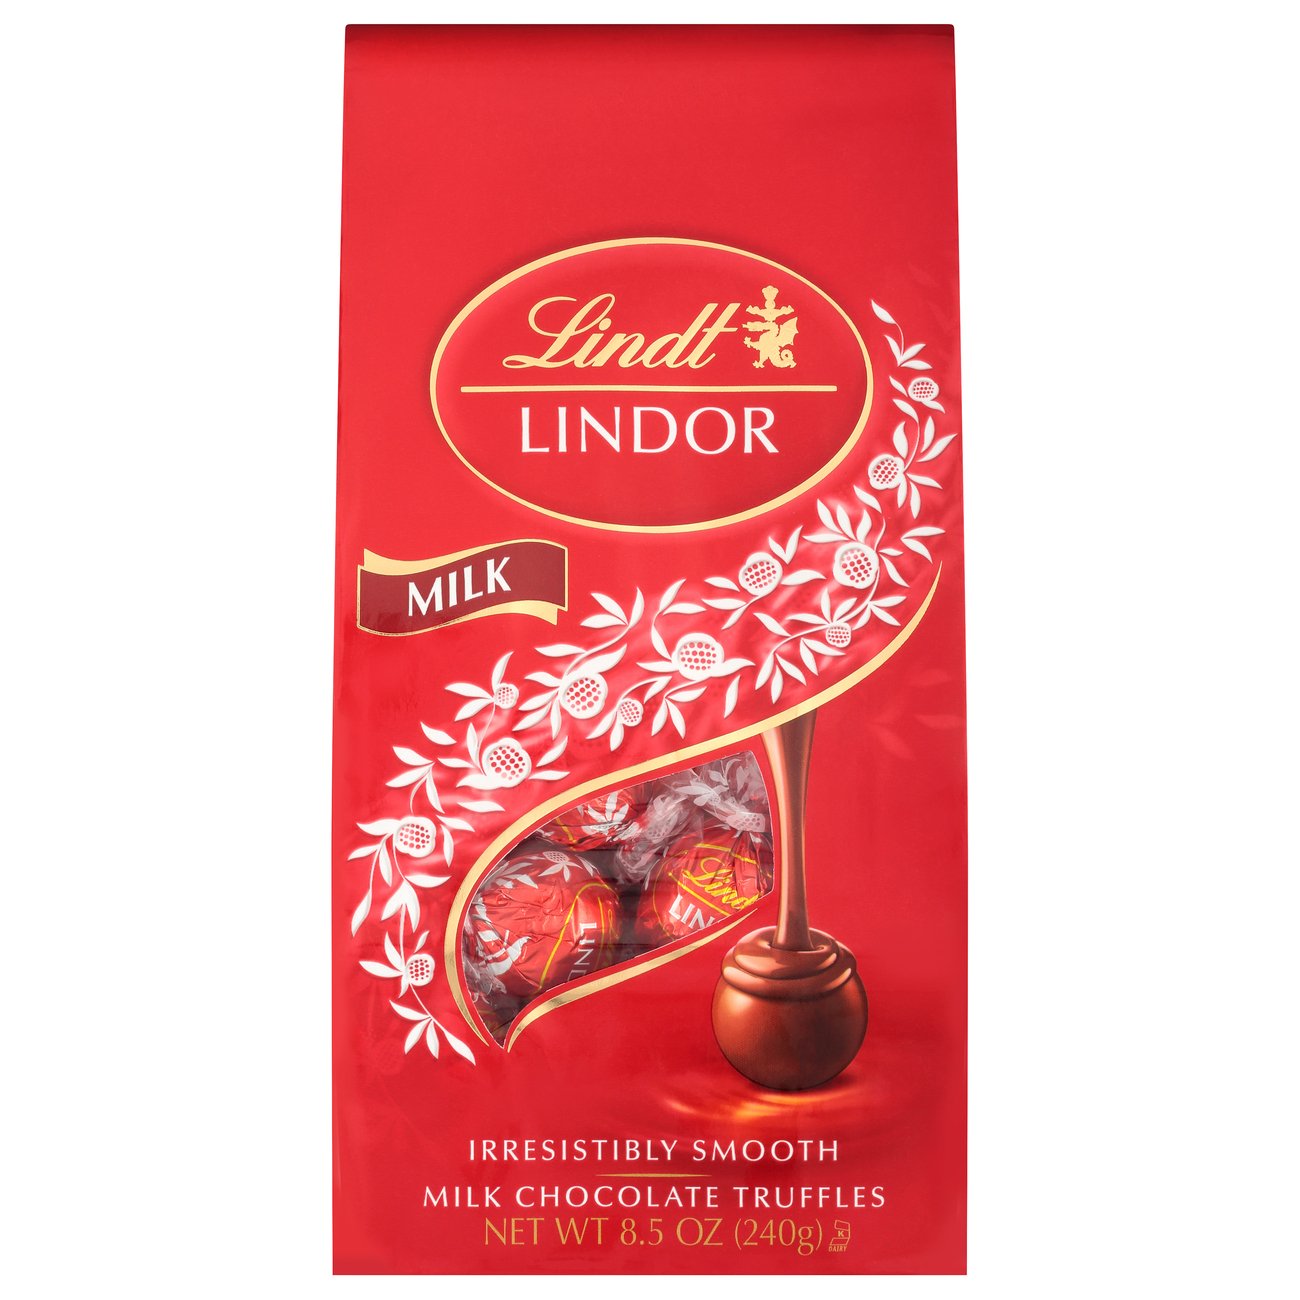 Lindt Lindor Caramel Milk Chocolate Truffles - Shop Candy at H-E-B